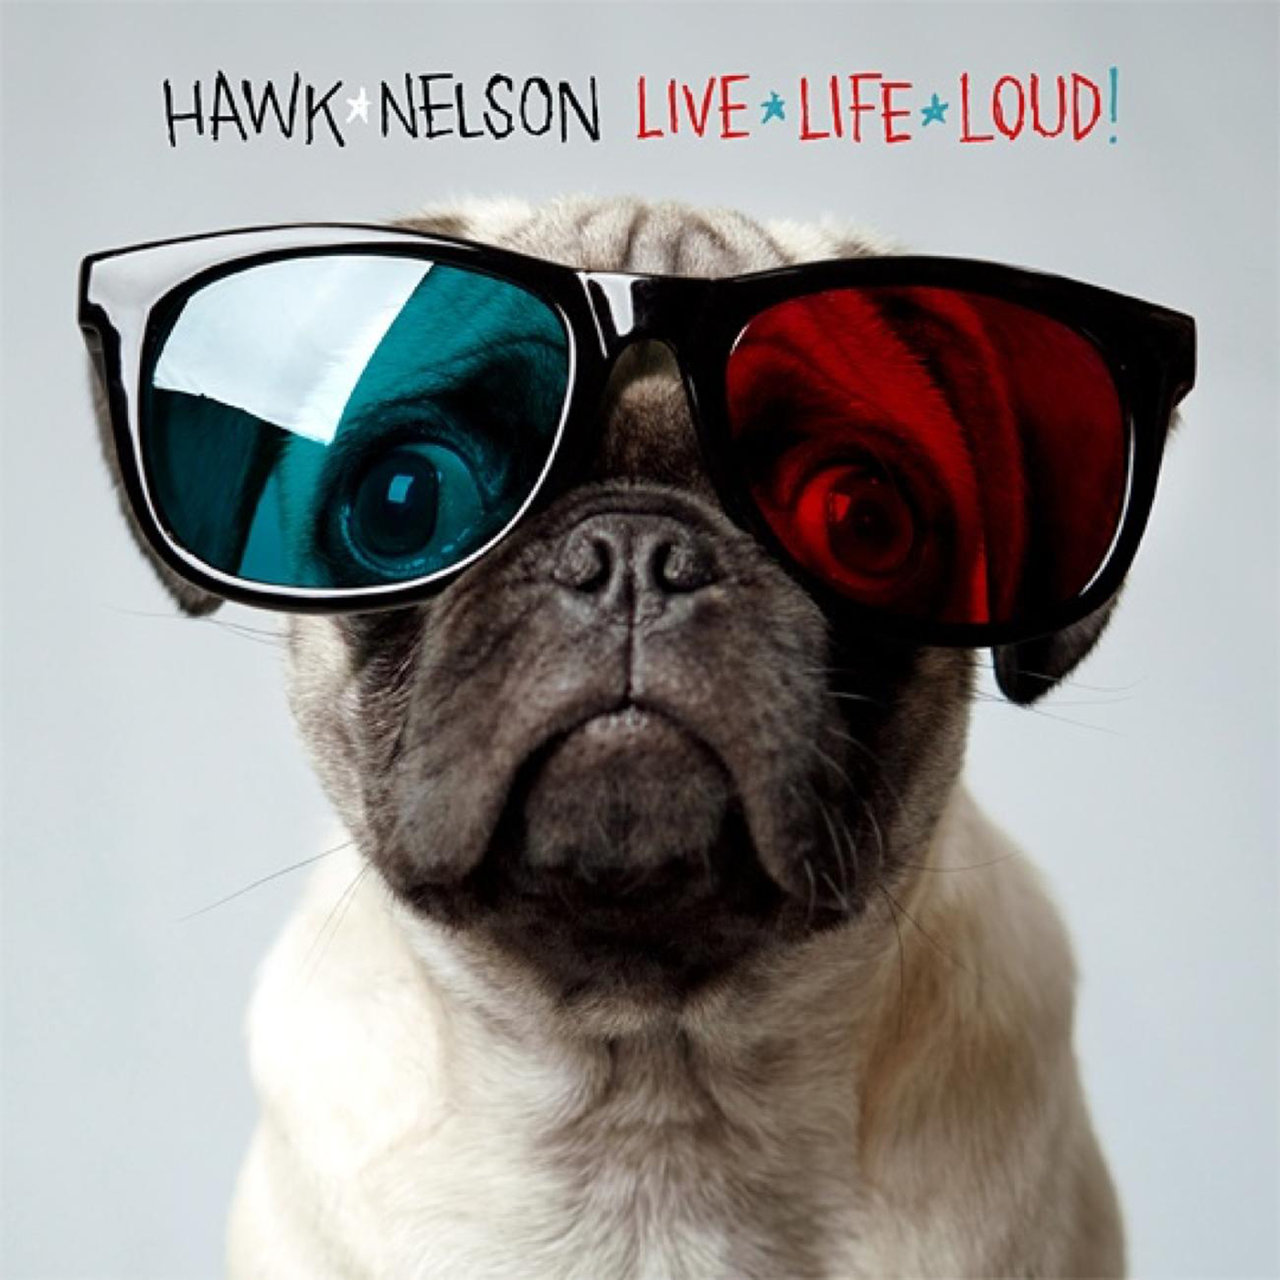 Hawk Nelson Live Life Loud cover artwork